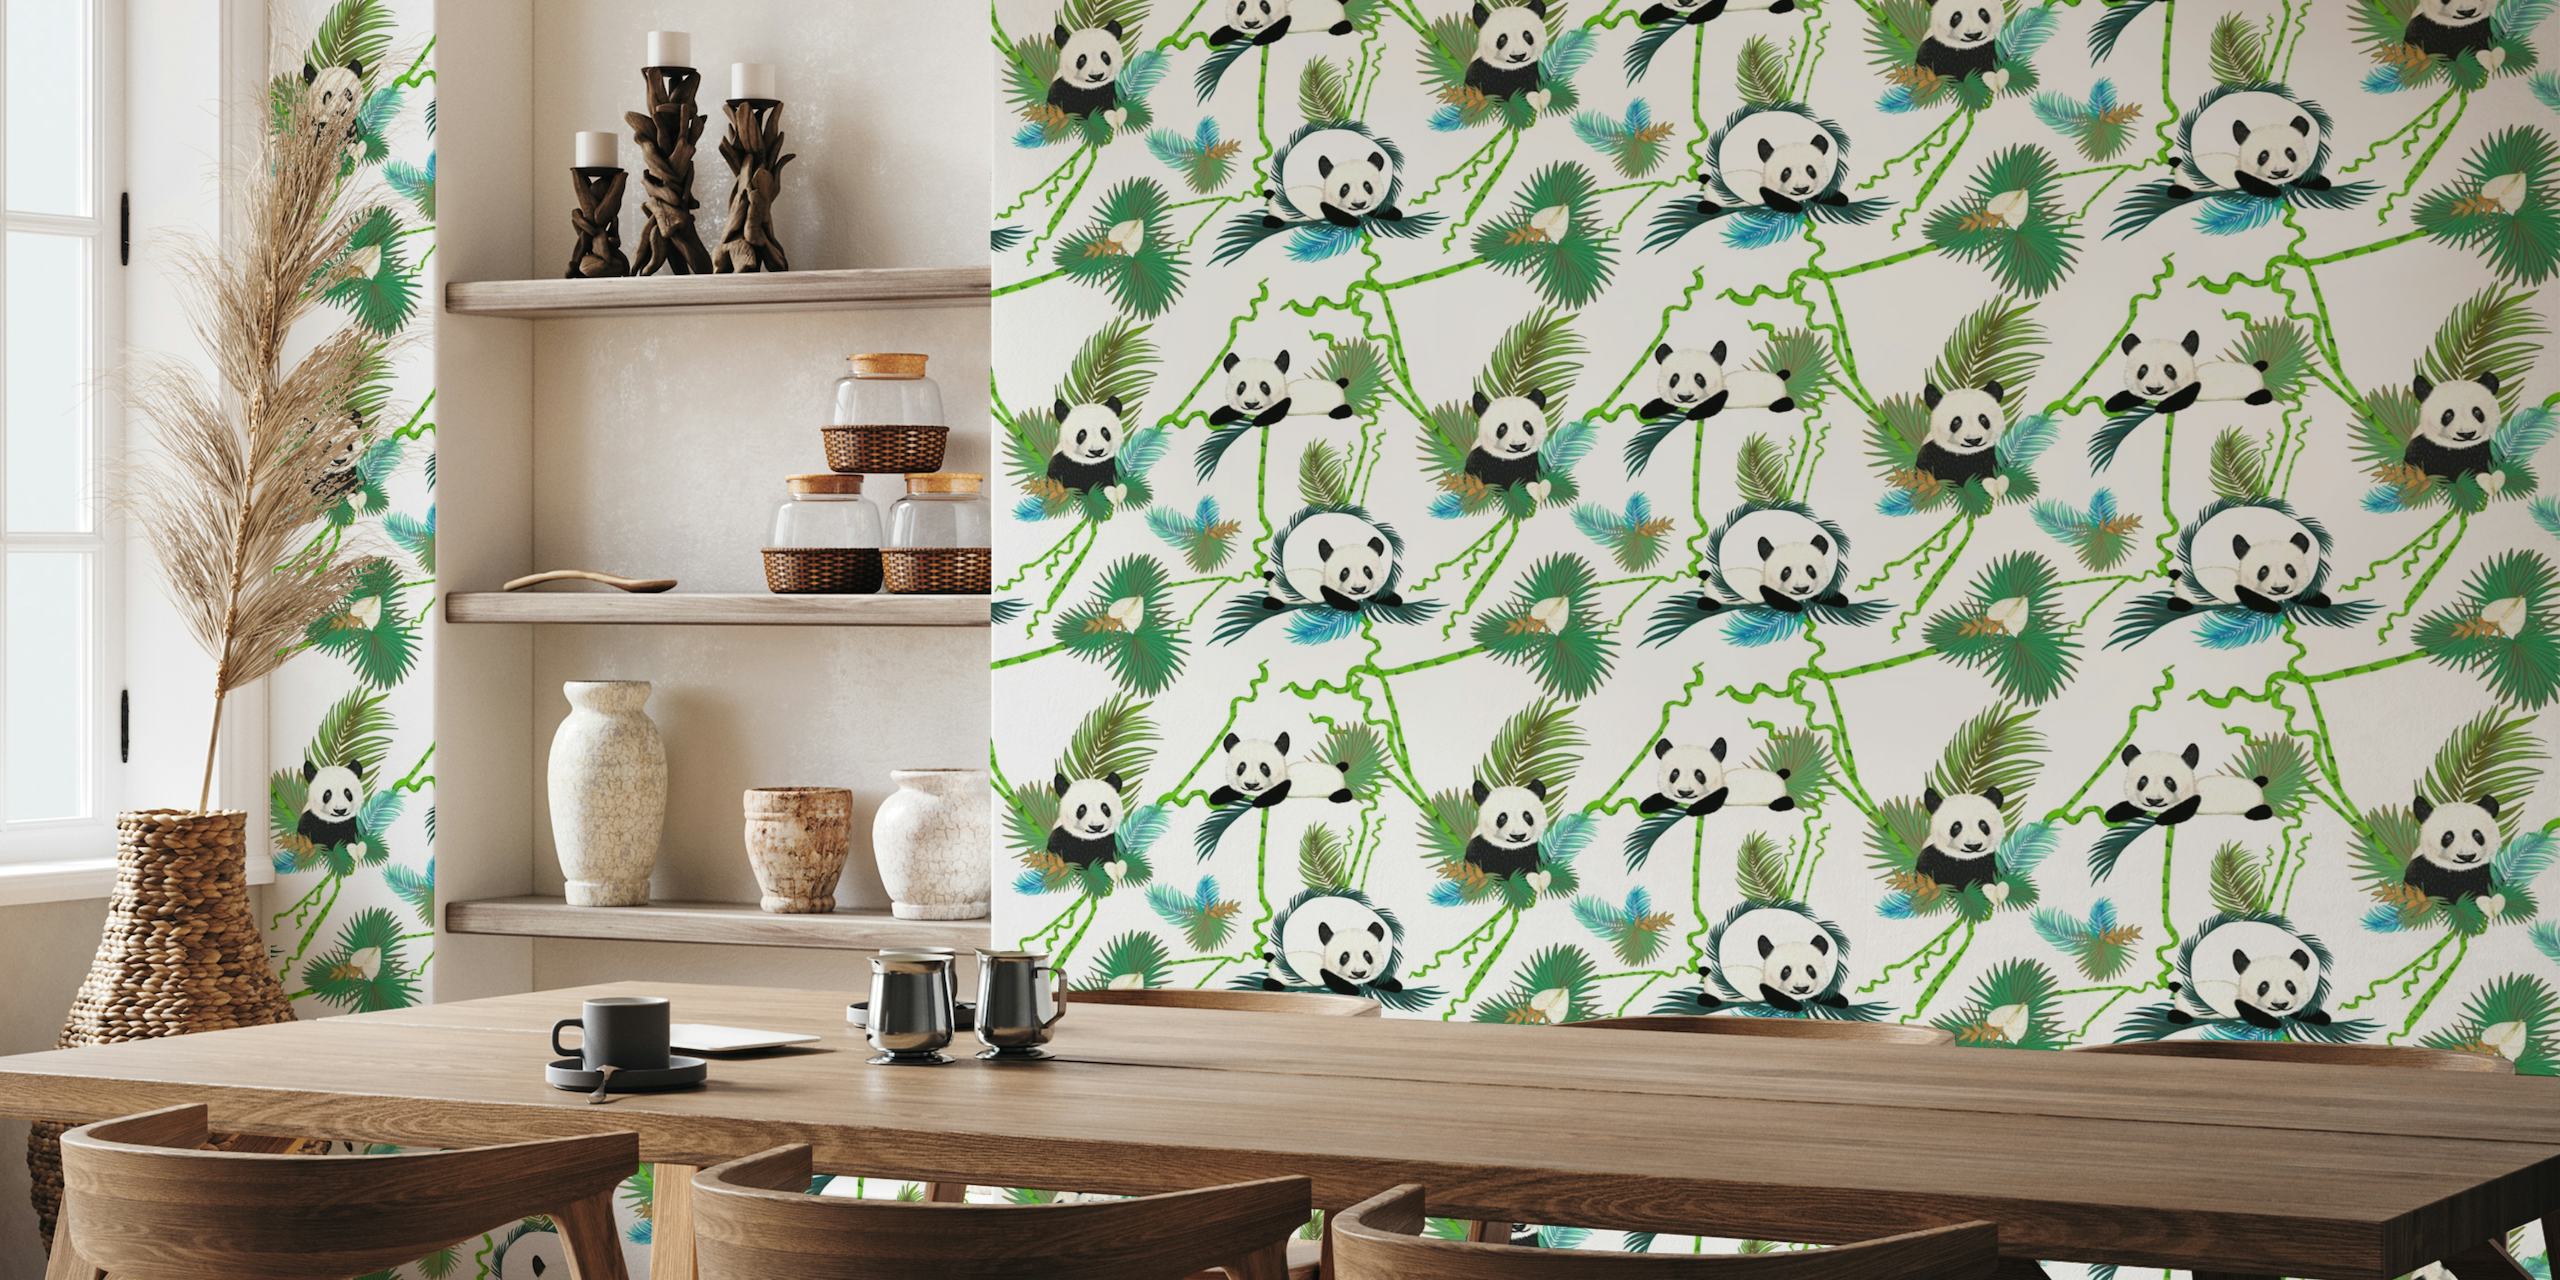 Bamboo and panda papiers peint